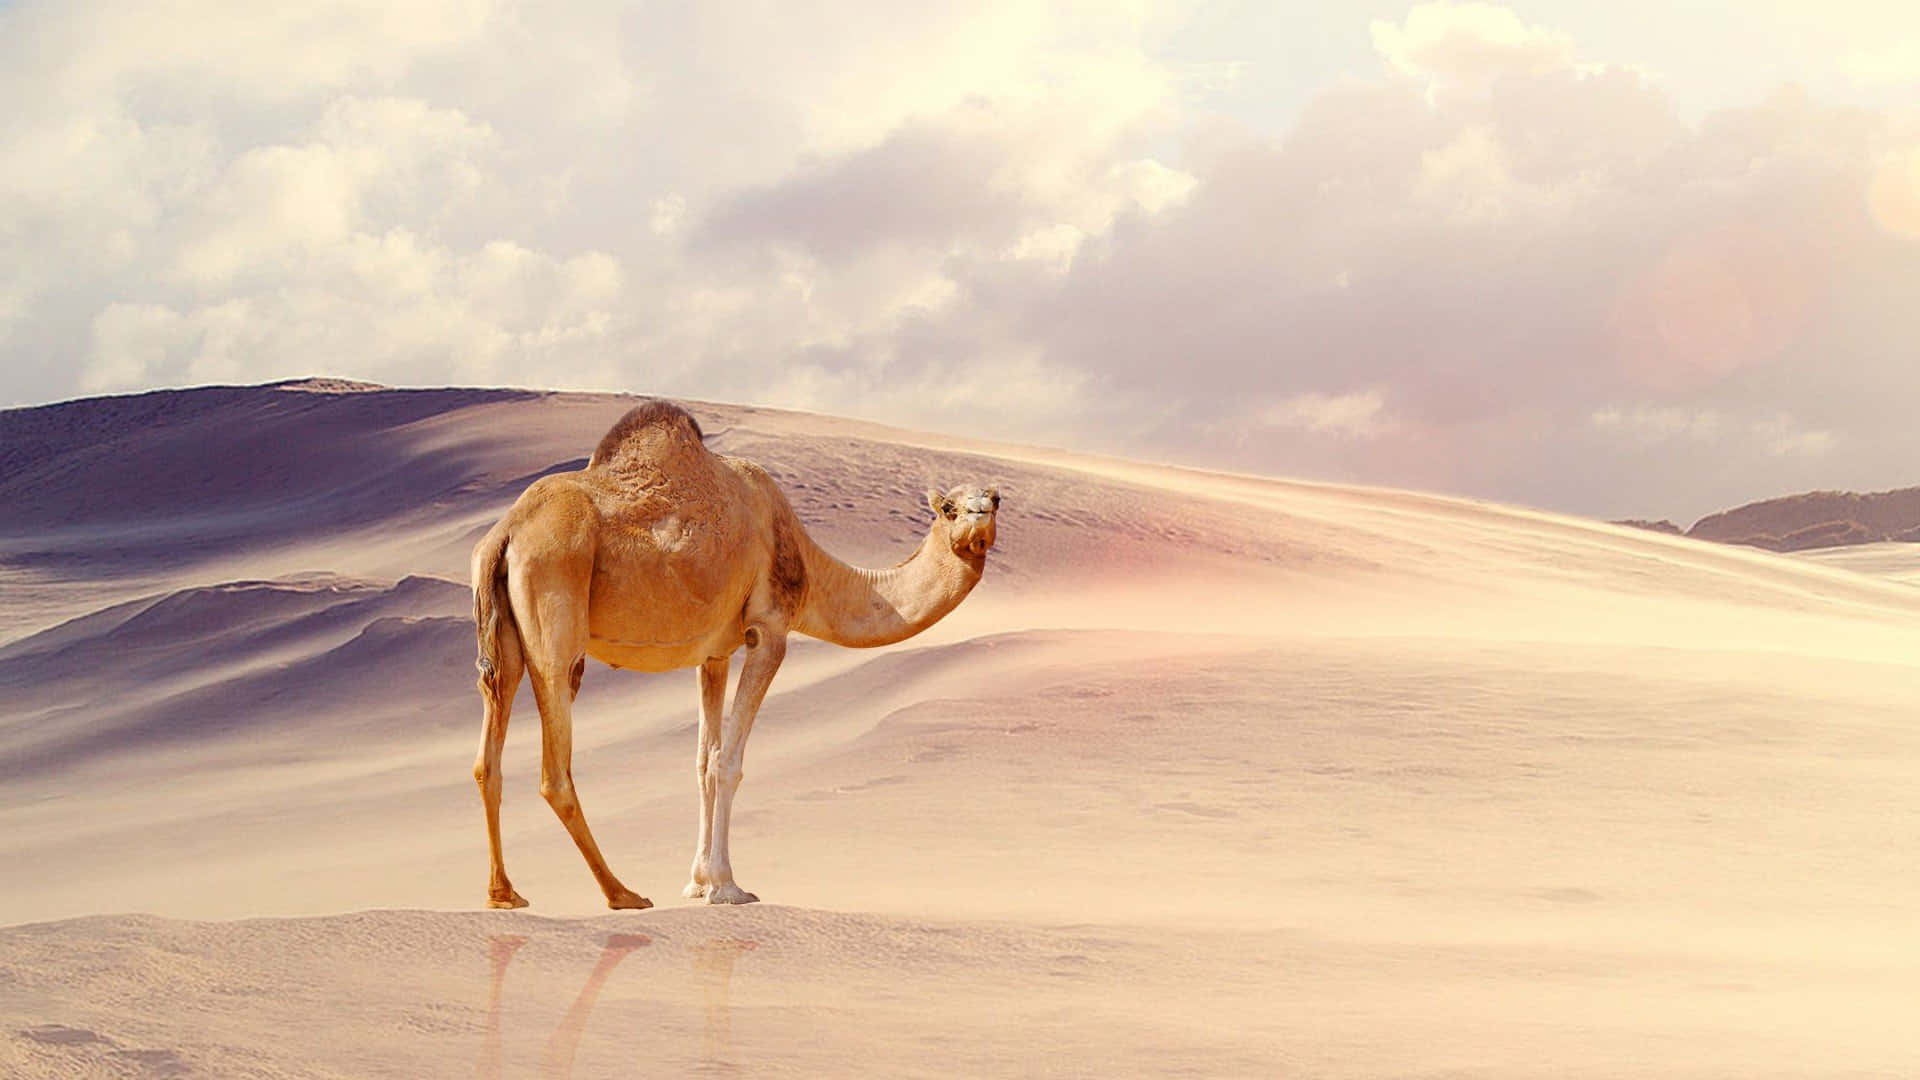 A Brown Camel Taking a Walk in a Sandy Desert Landscape